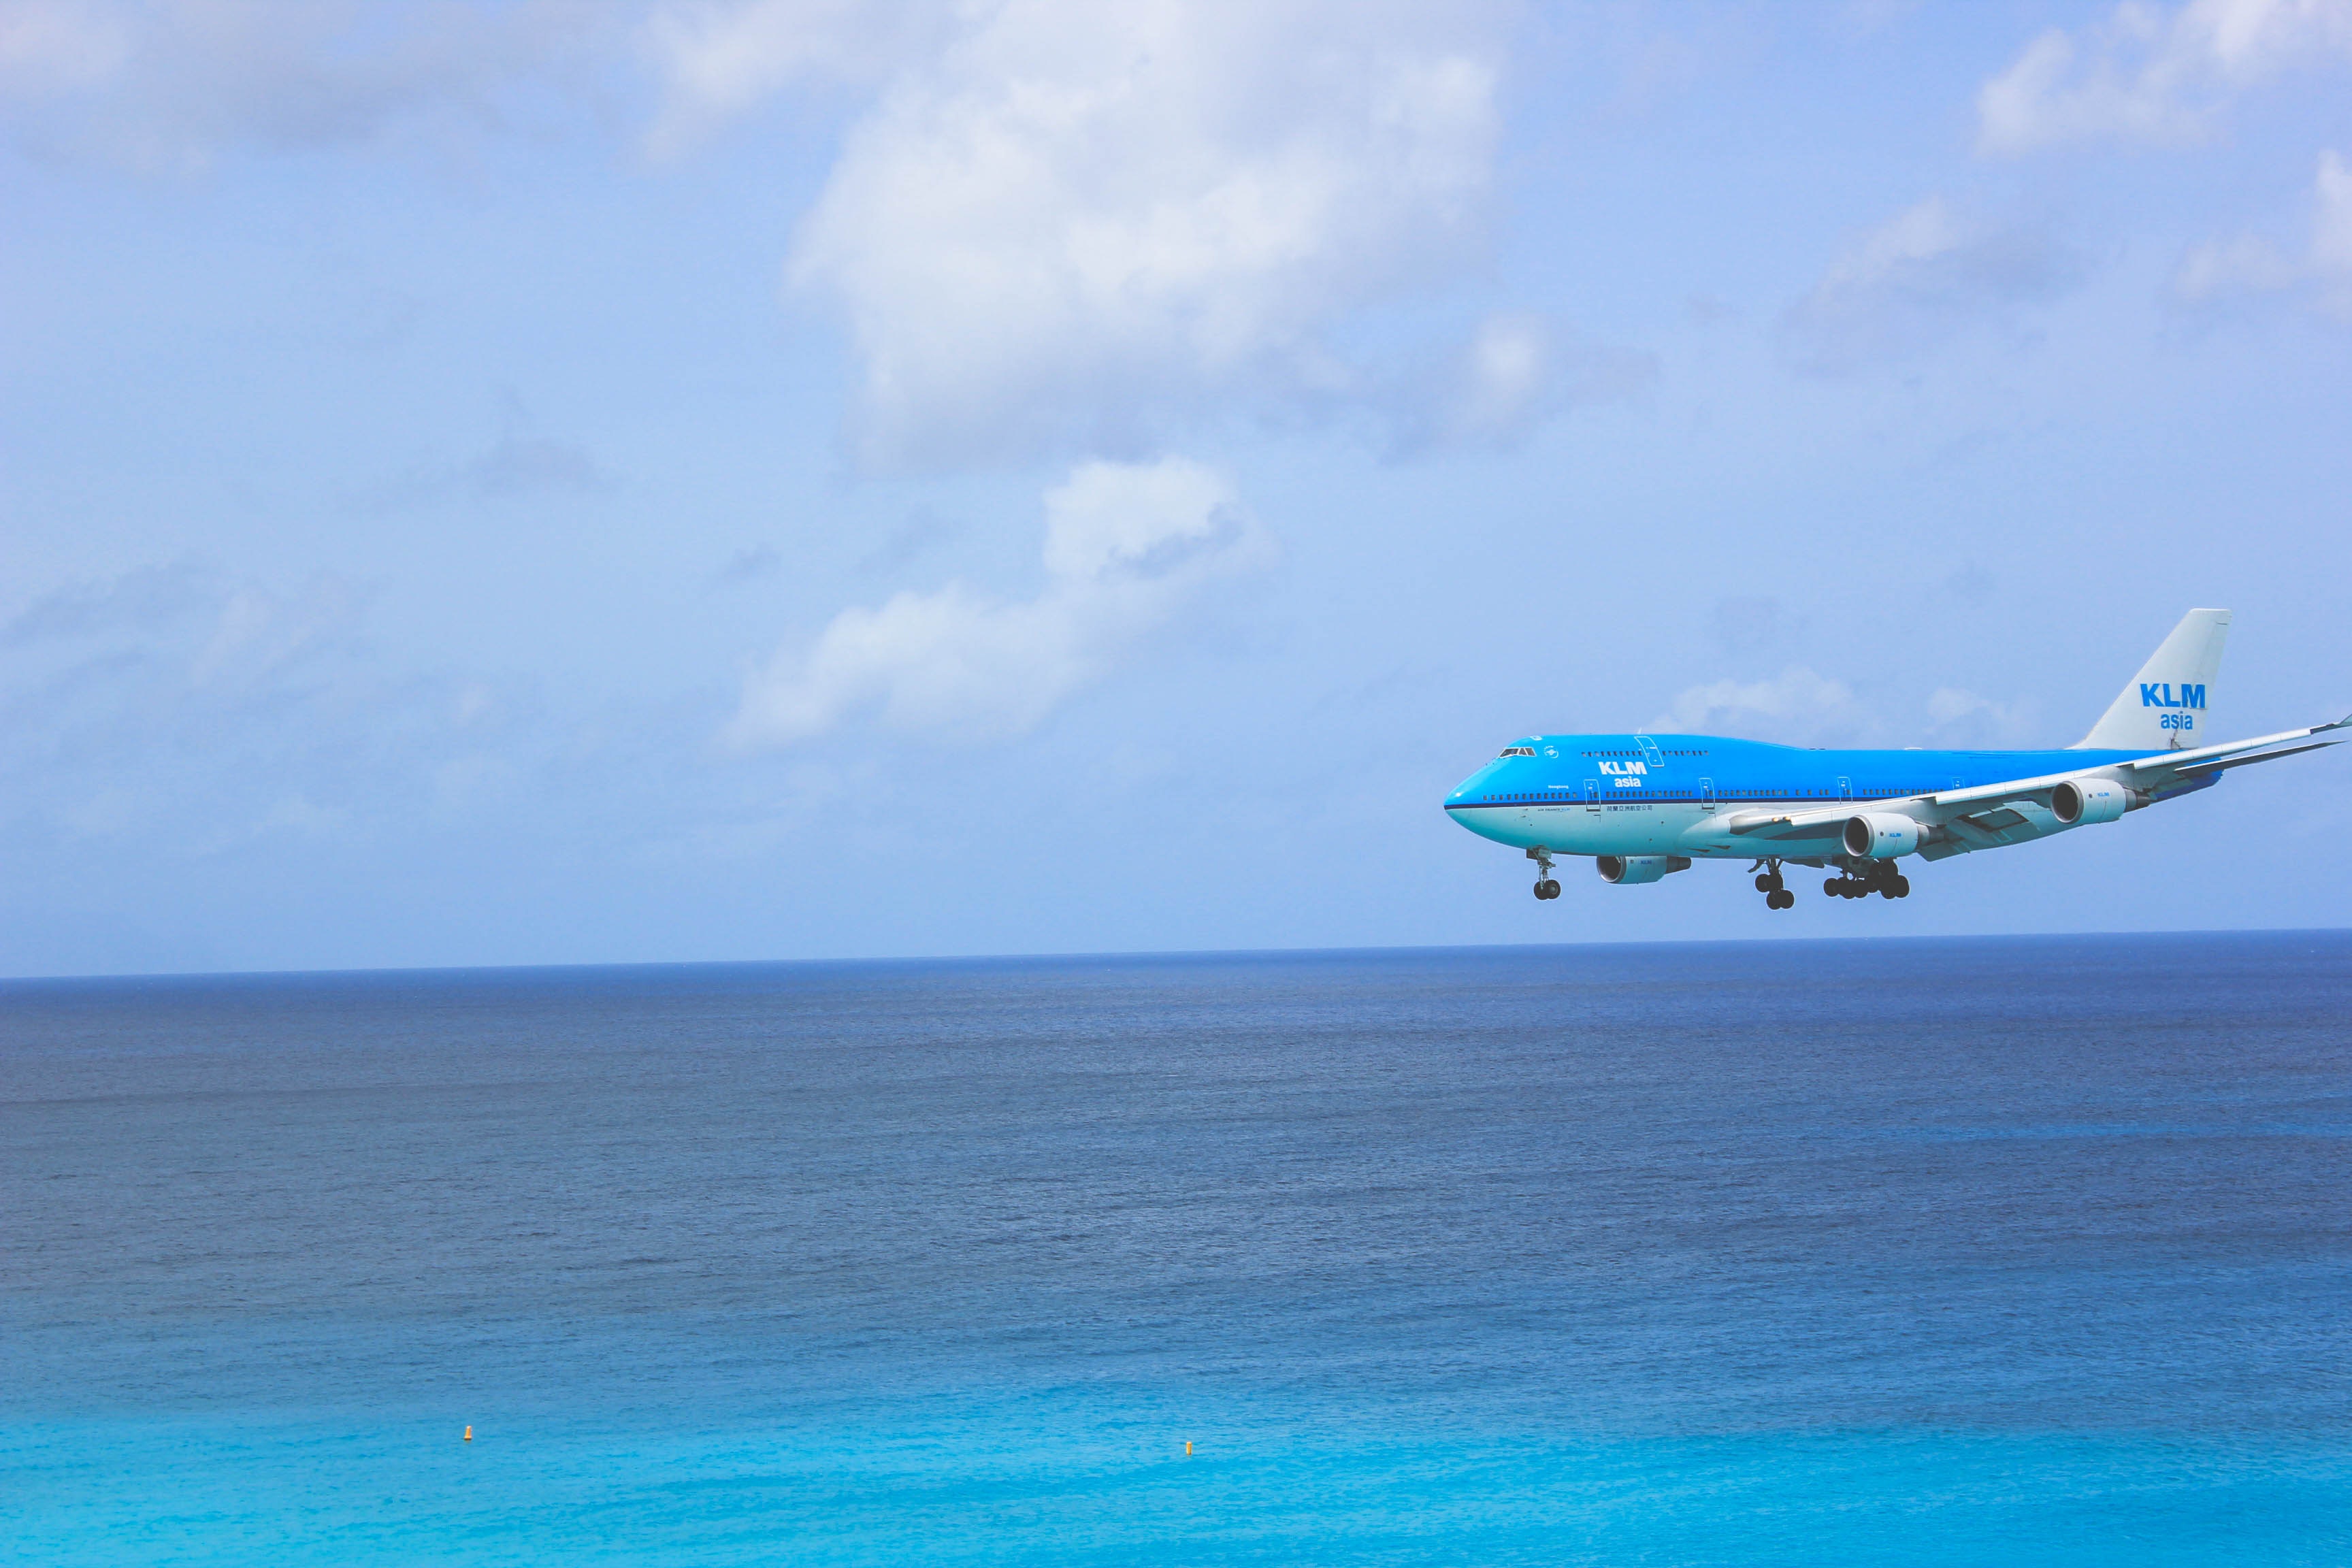 White and Blue Passenger Plane, Air travel, Ocean, Vacation, Tropical, HQ Photo